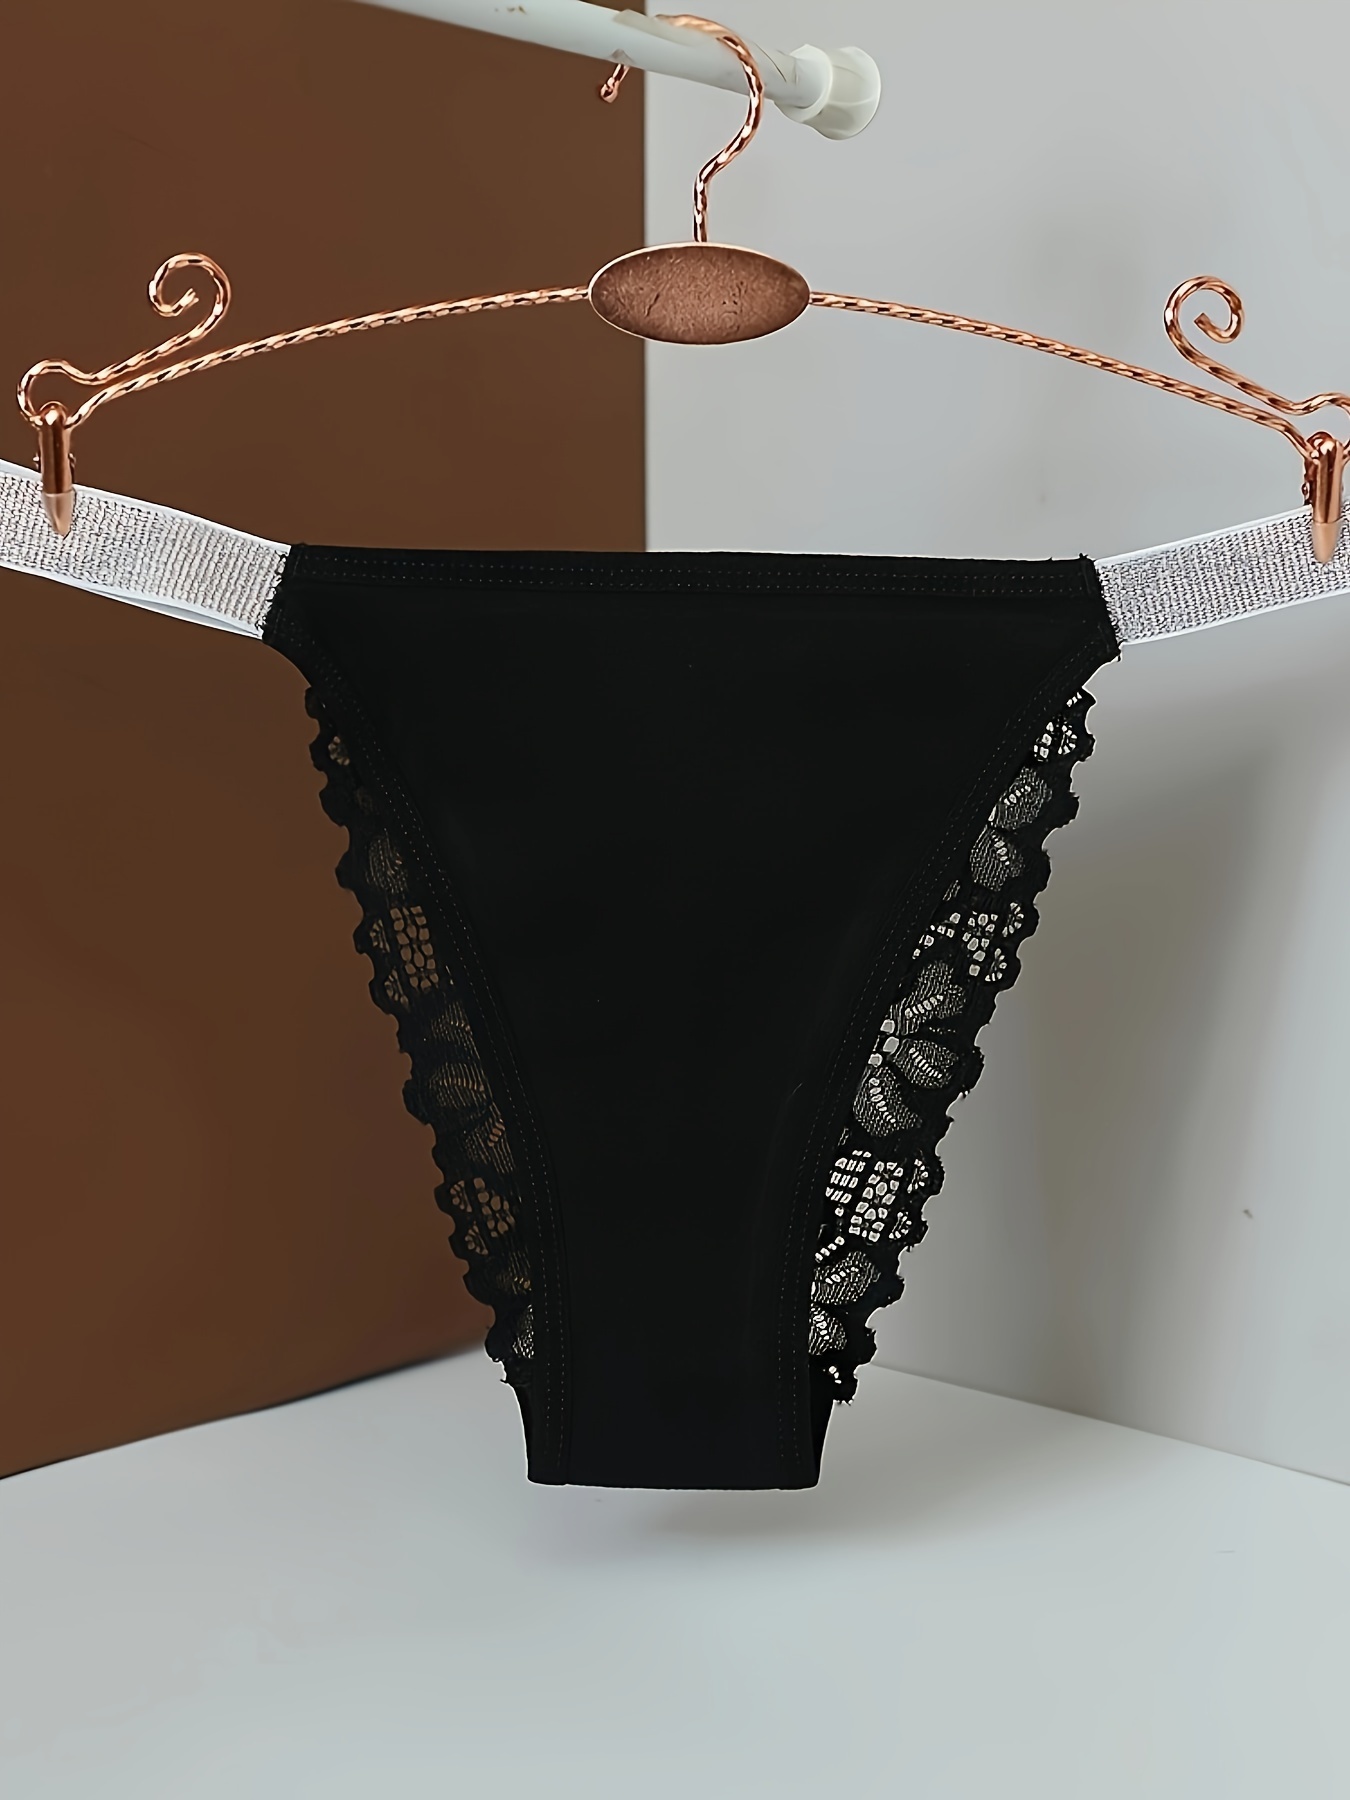 Lace Black Seamless Thongs Sexy Women Breathable Lingeries Low-Waist Panties  - China Panties and Low Waist Panties price